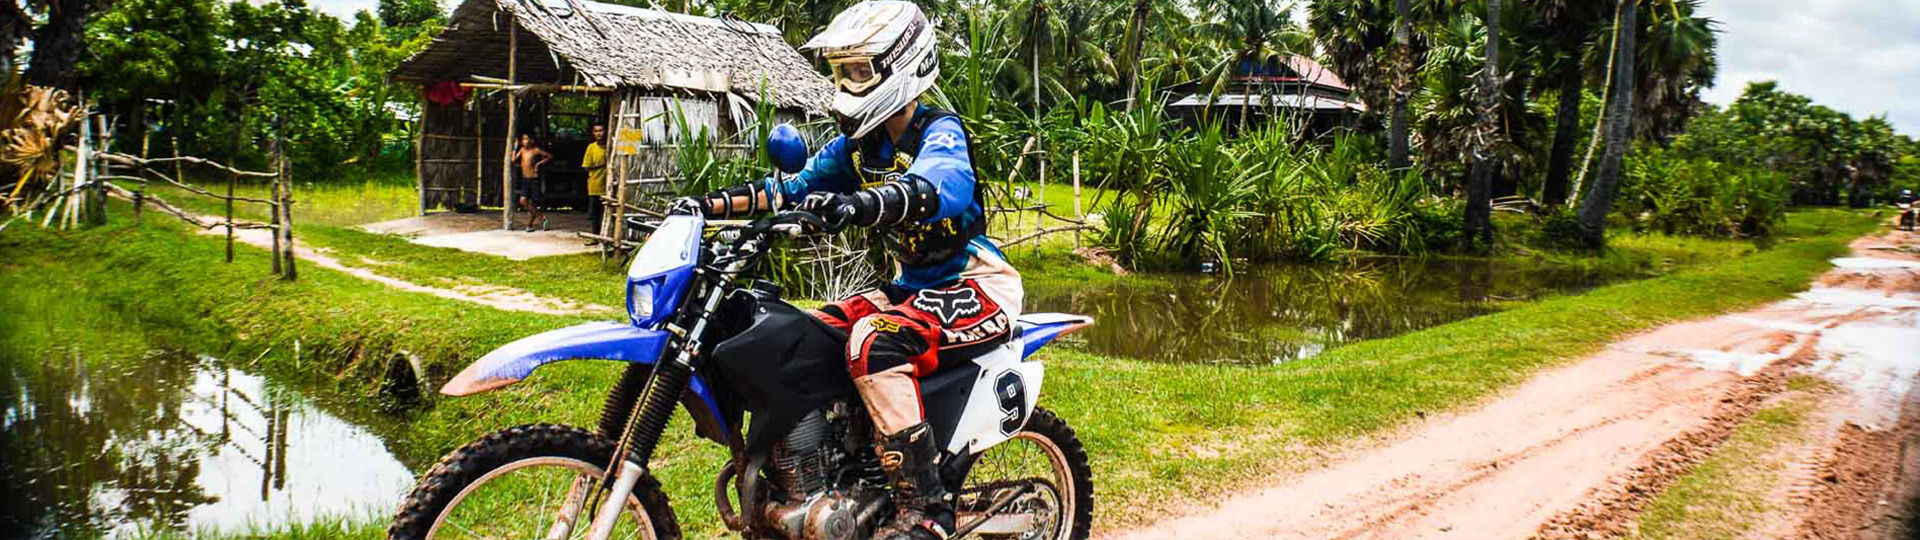 4 Days Hanoi Motorbike To Halong Bay - Catba island